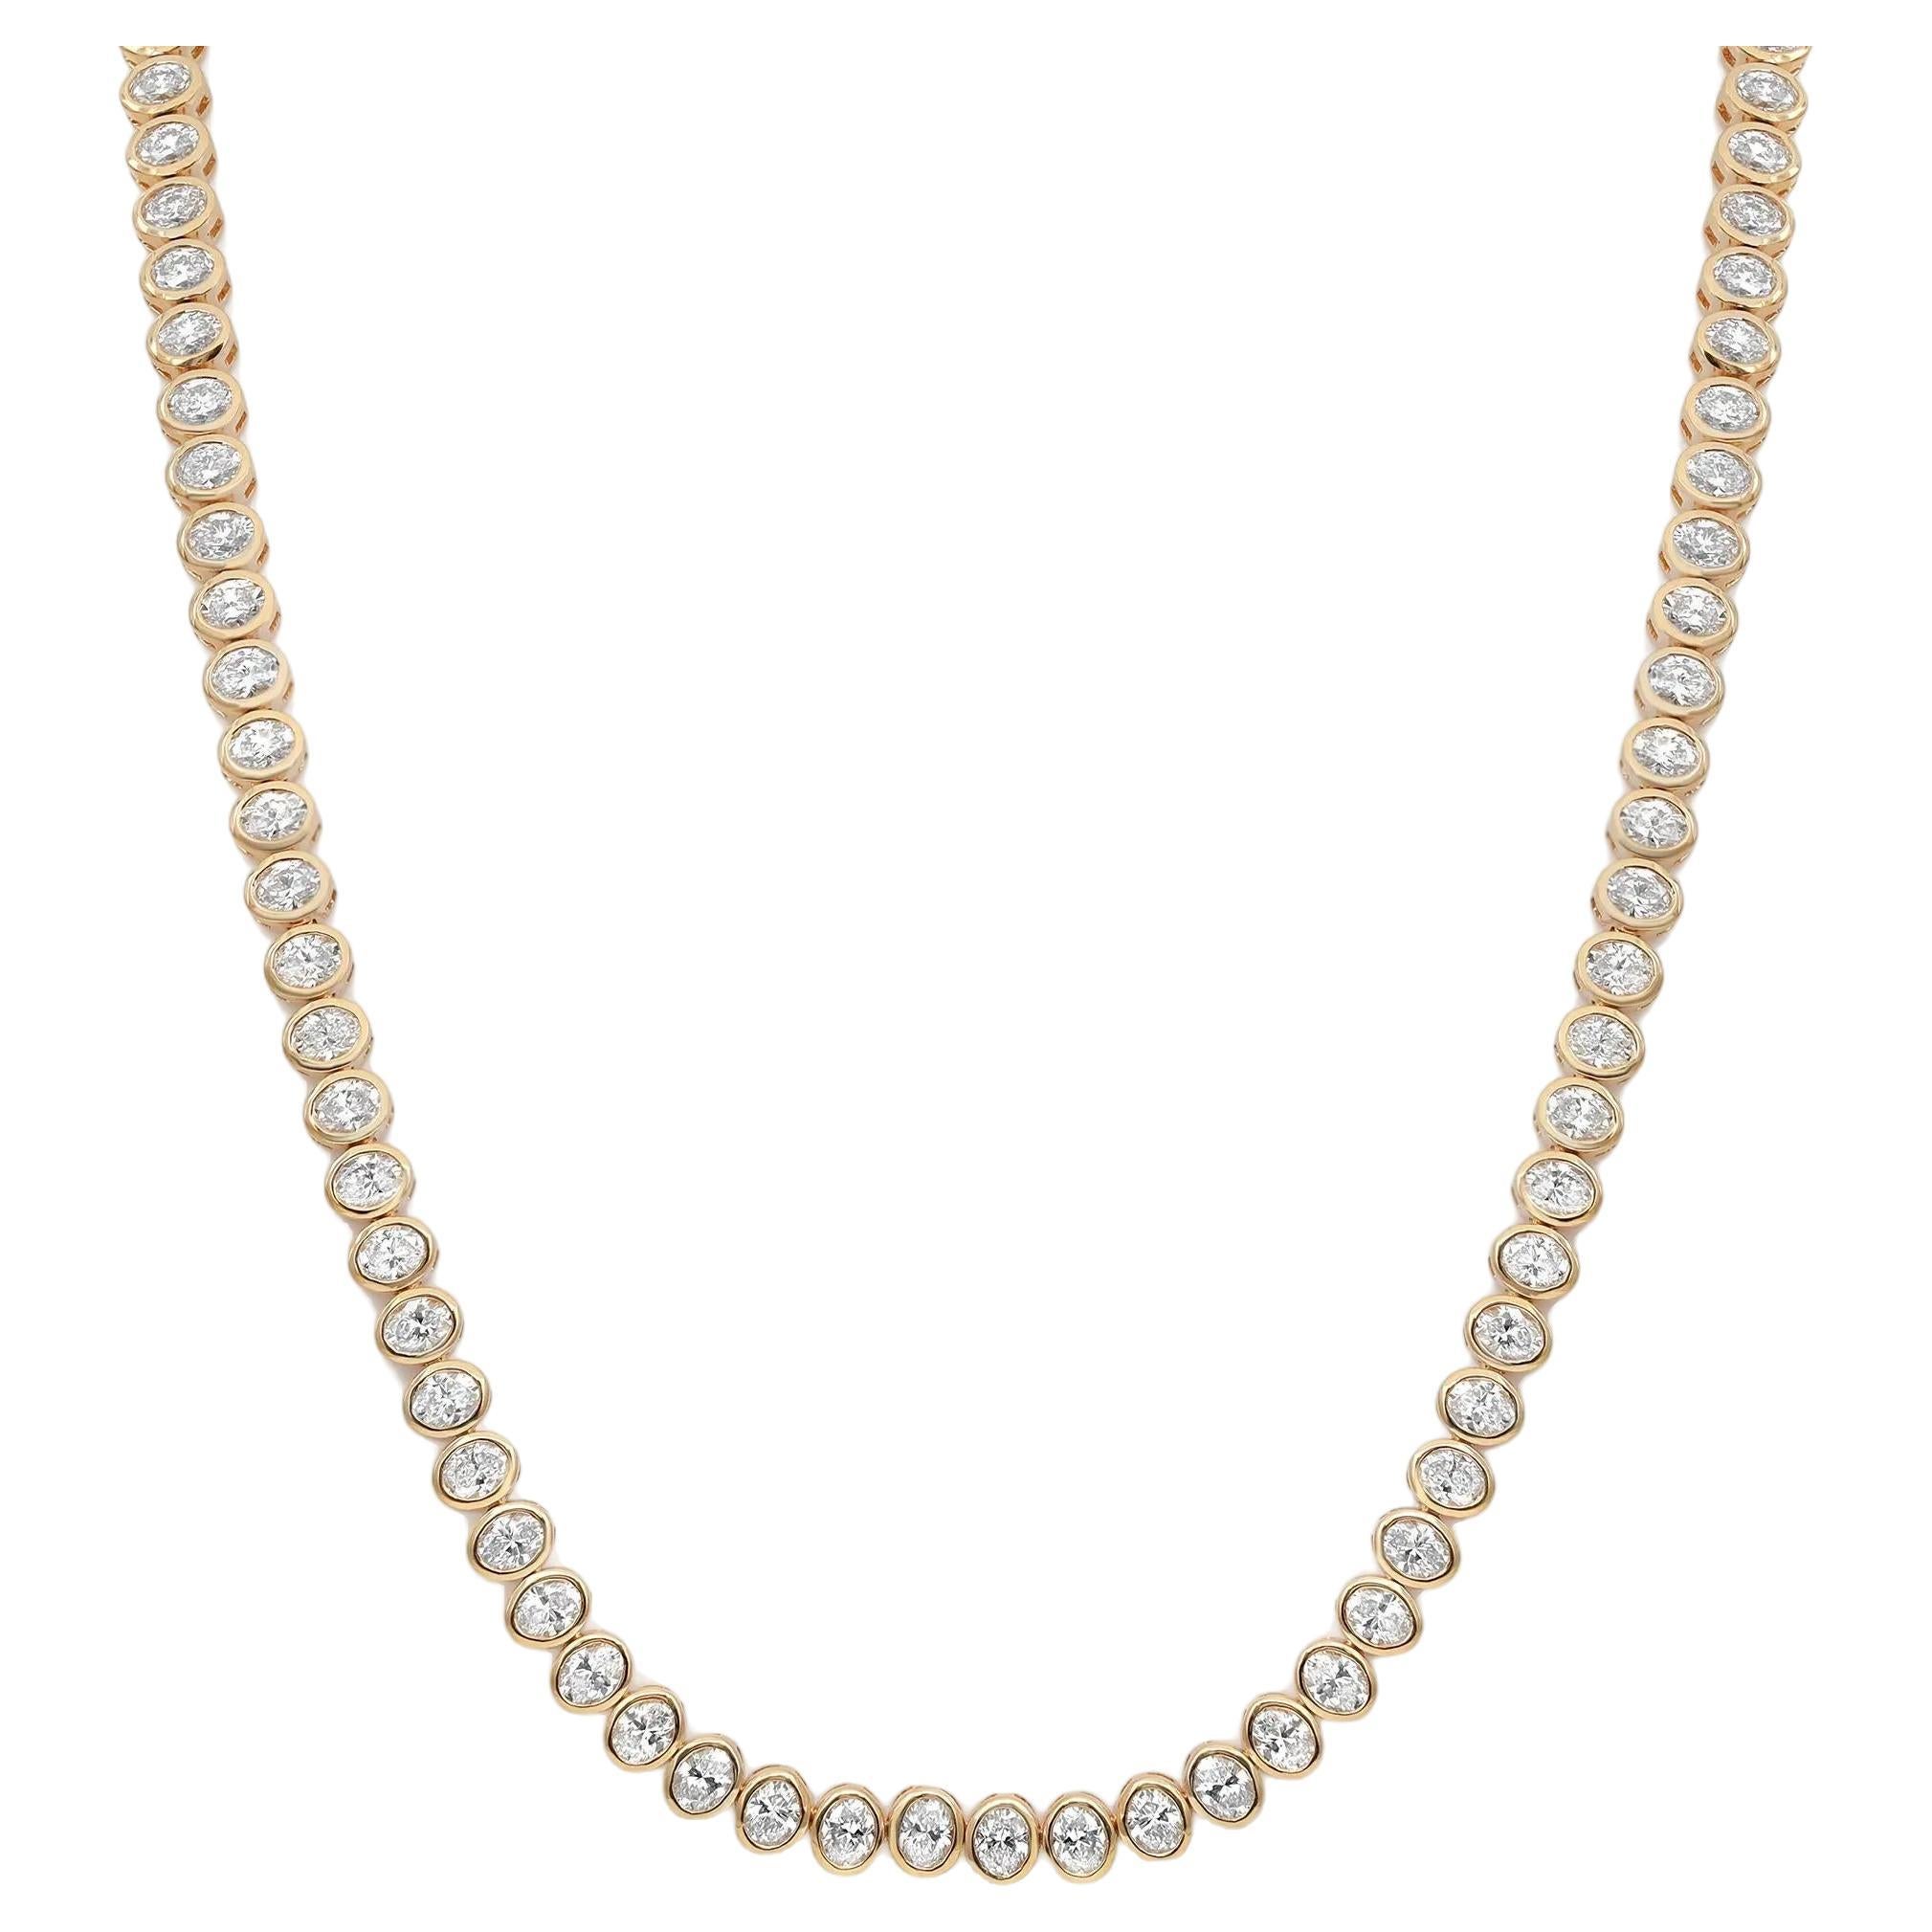 Bezel Set Oval Cut Diamond Tennis Necklace 18K White Gold 14.76Cttw 17 Inches